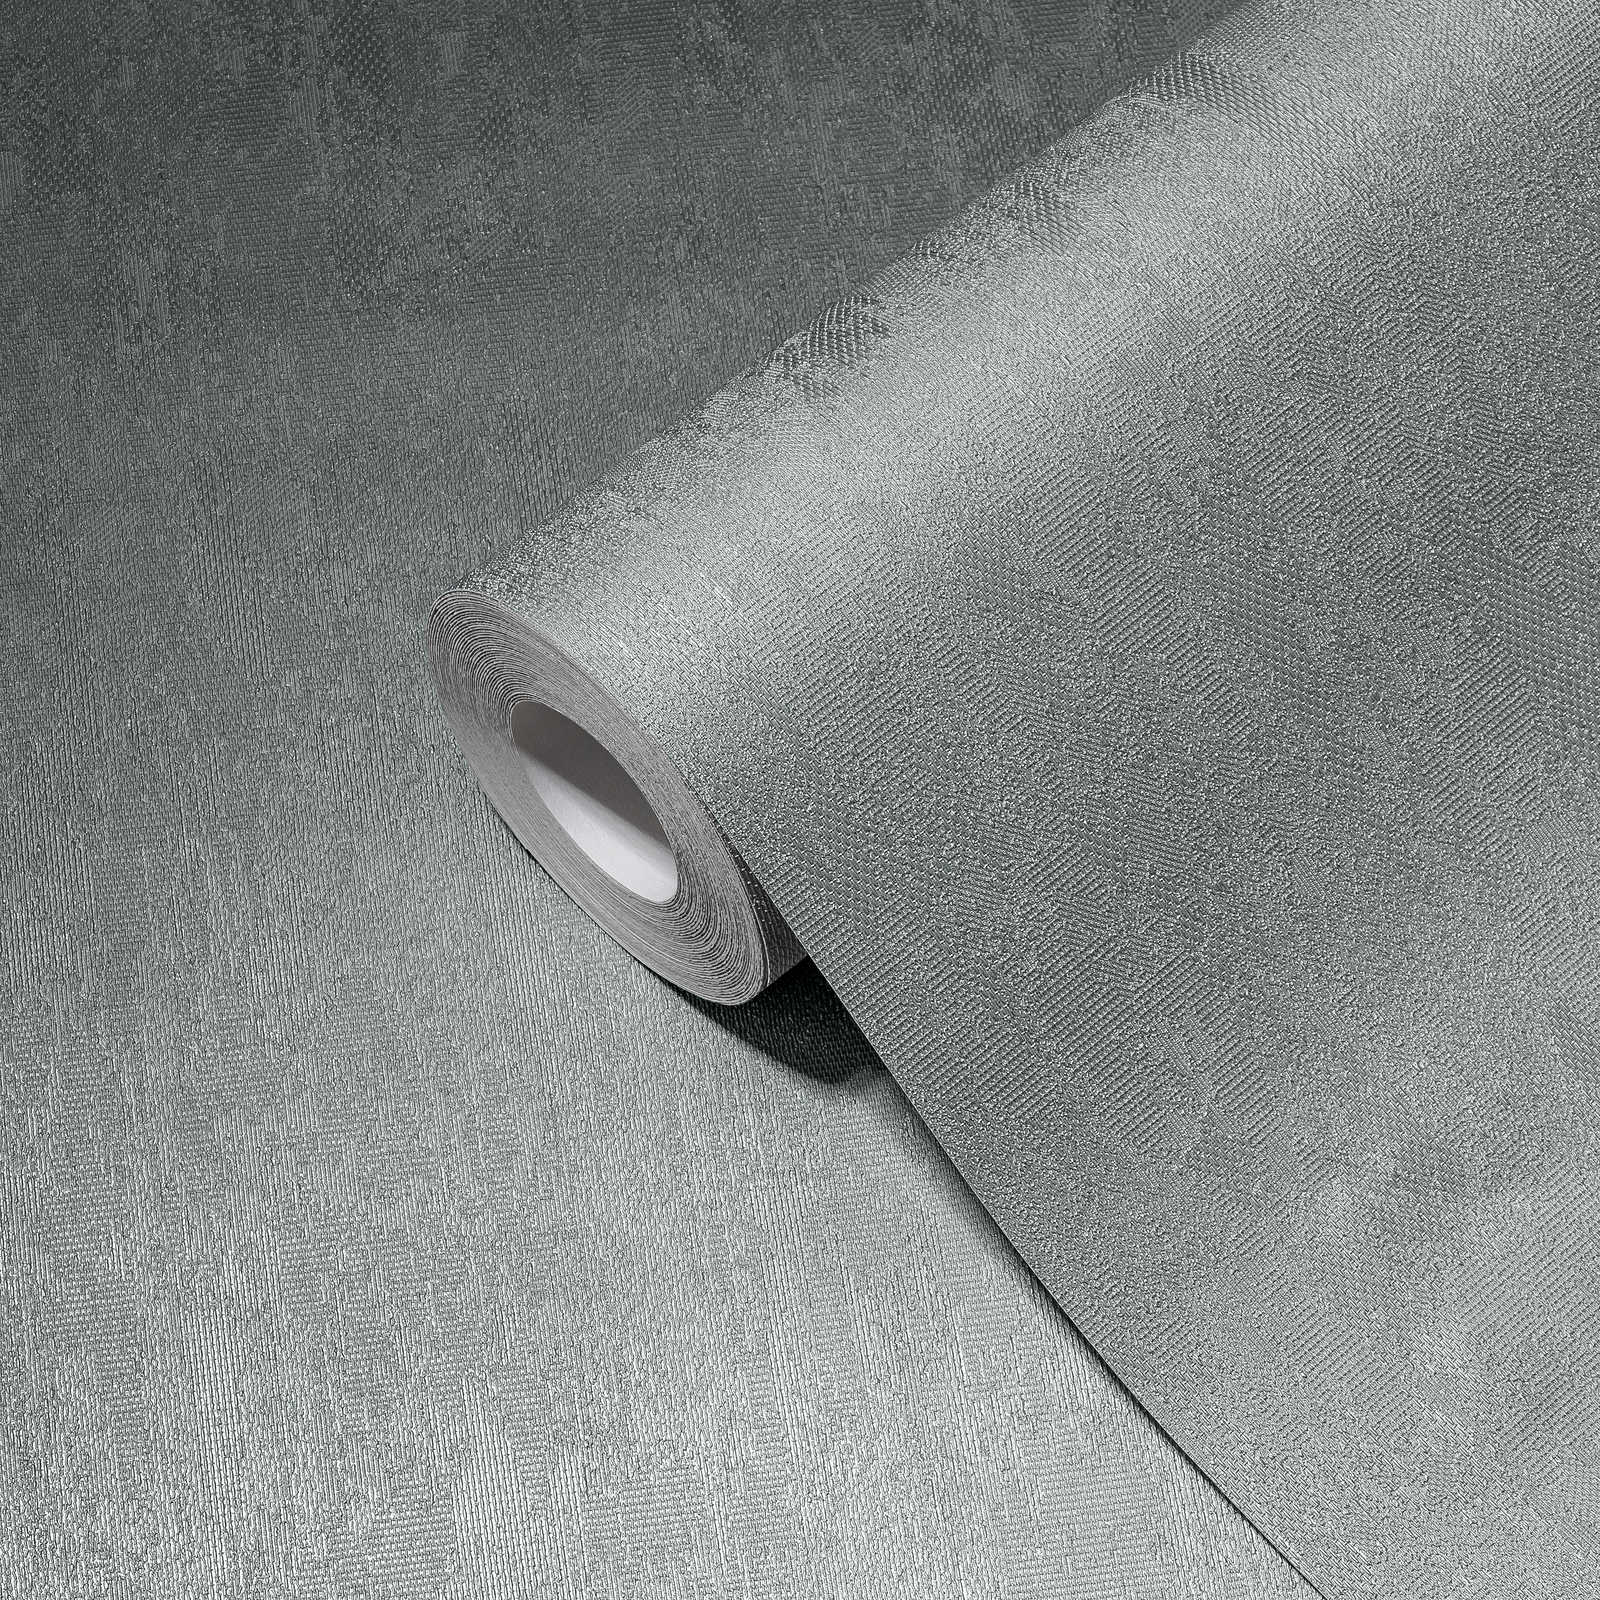             Einfarbige Tapete mit Struktureffekt – Grau
        